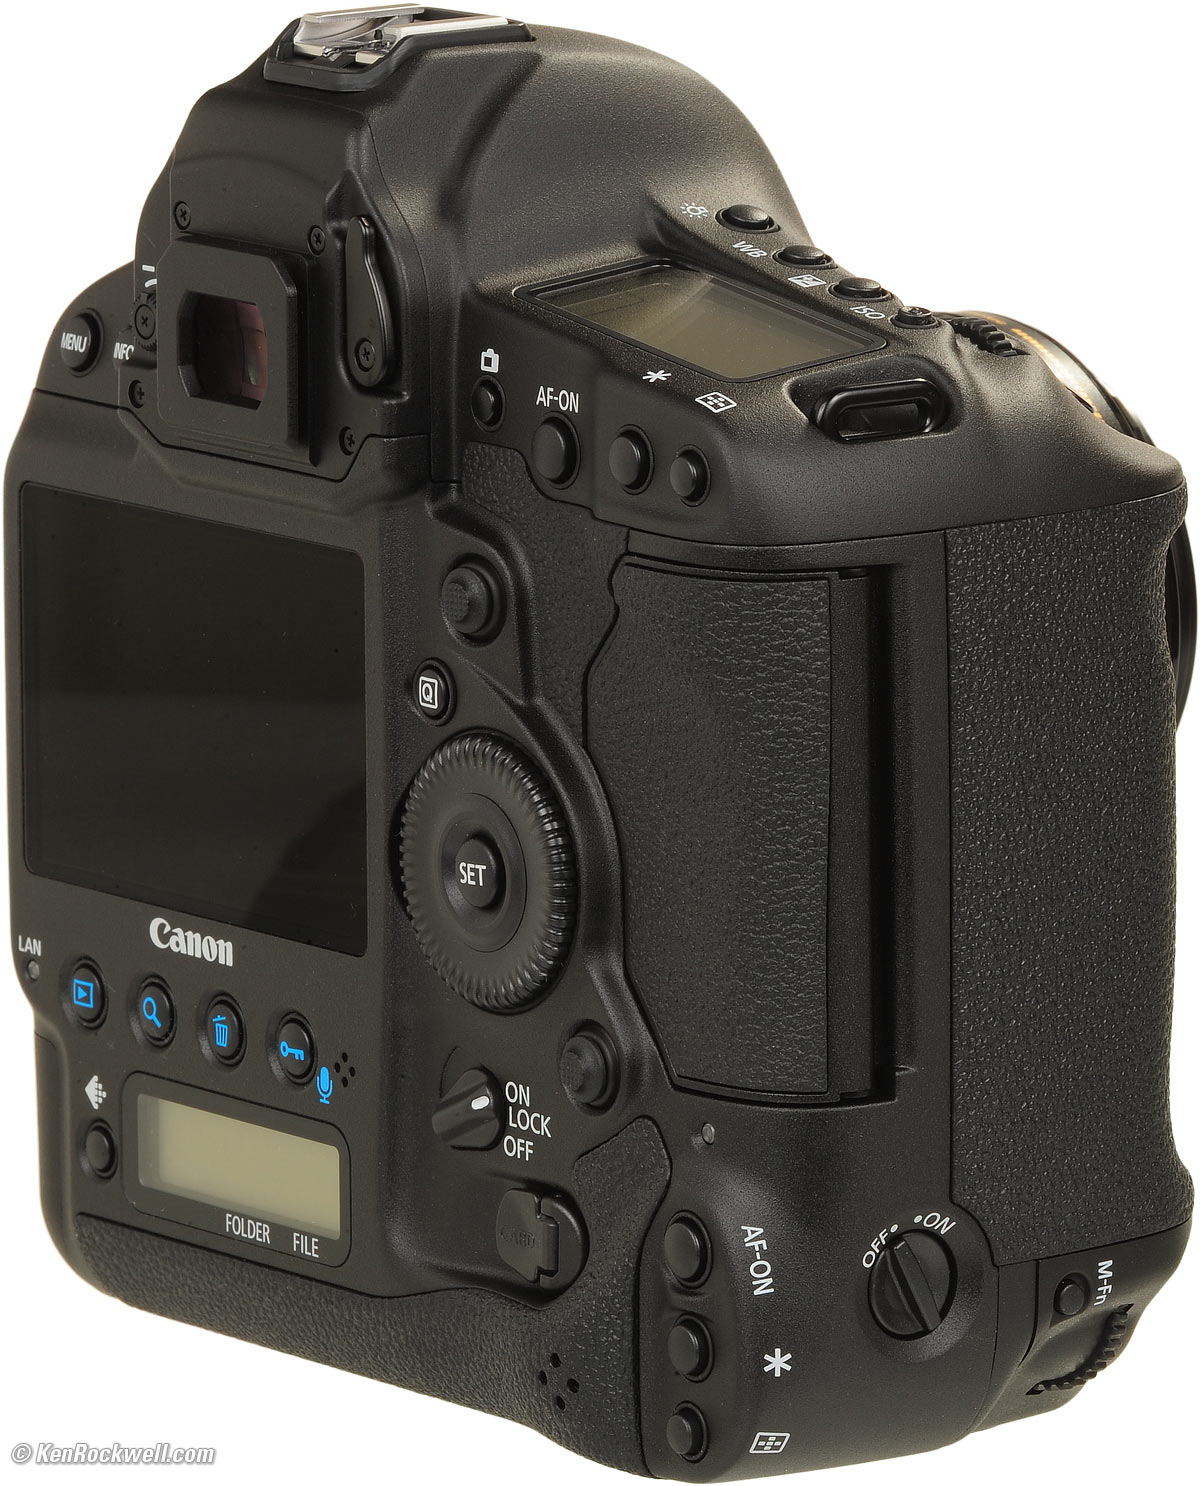 Canon 1D X Review